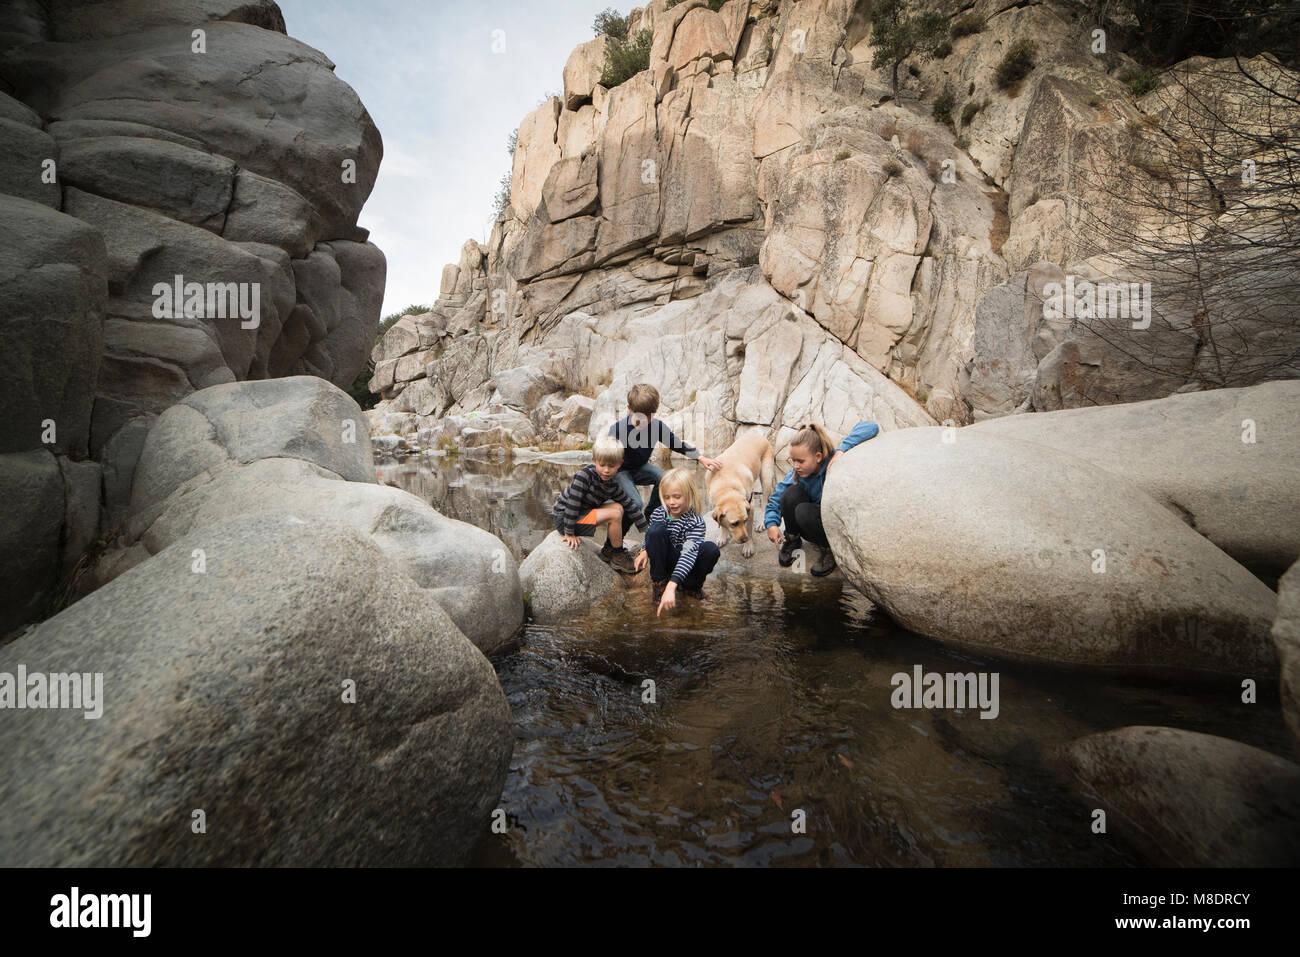 Children playing on rocks in river, Lake Arrowhead, California, USA Stock Photo